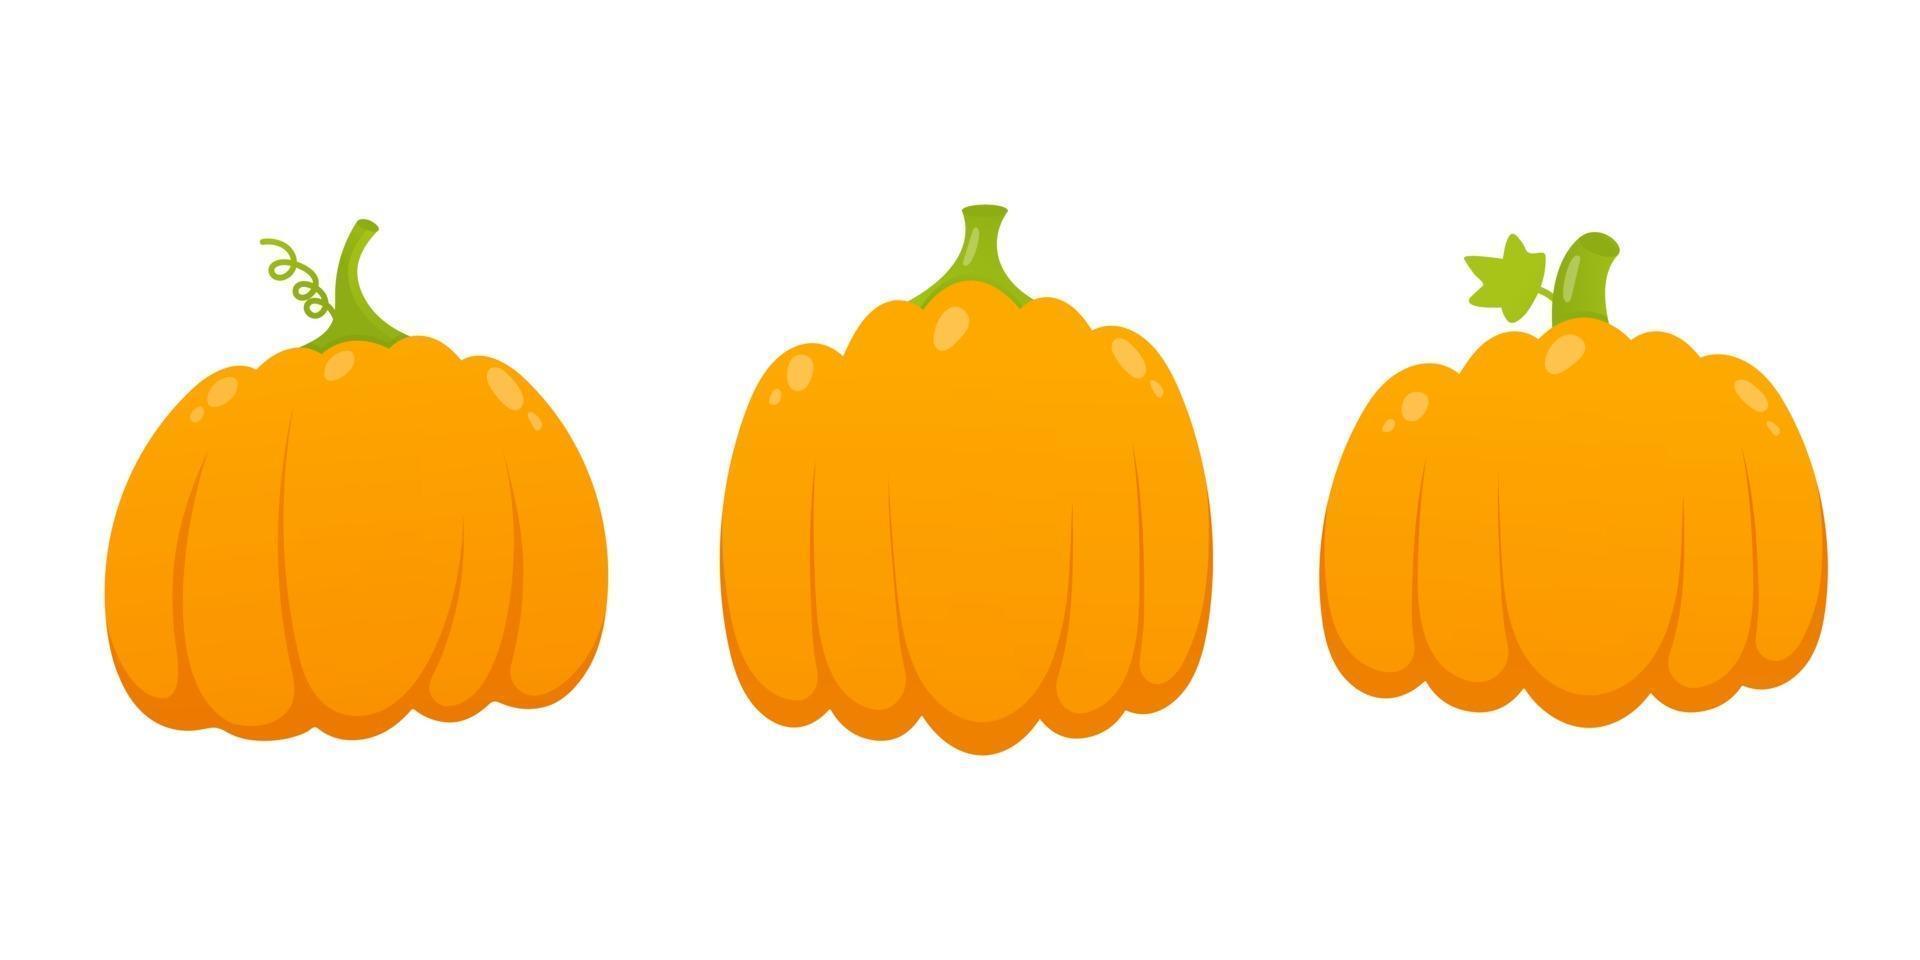 3 orange pumpkins set with leaf and gradient colors flat style design vector illustration